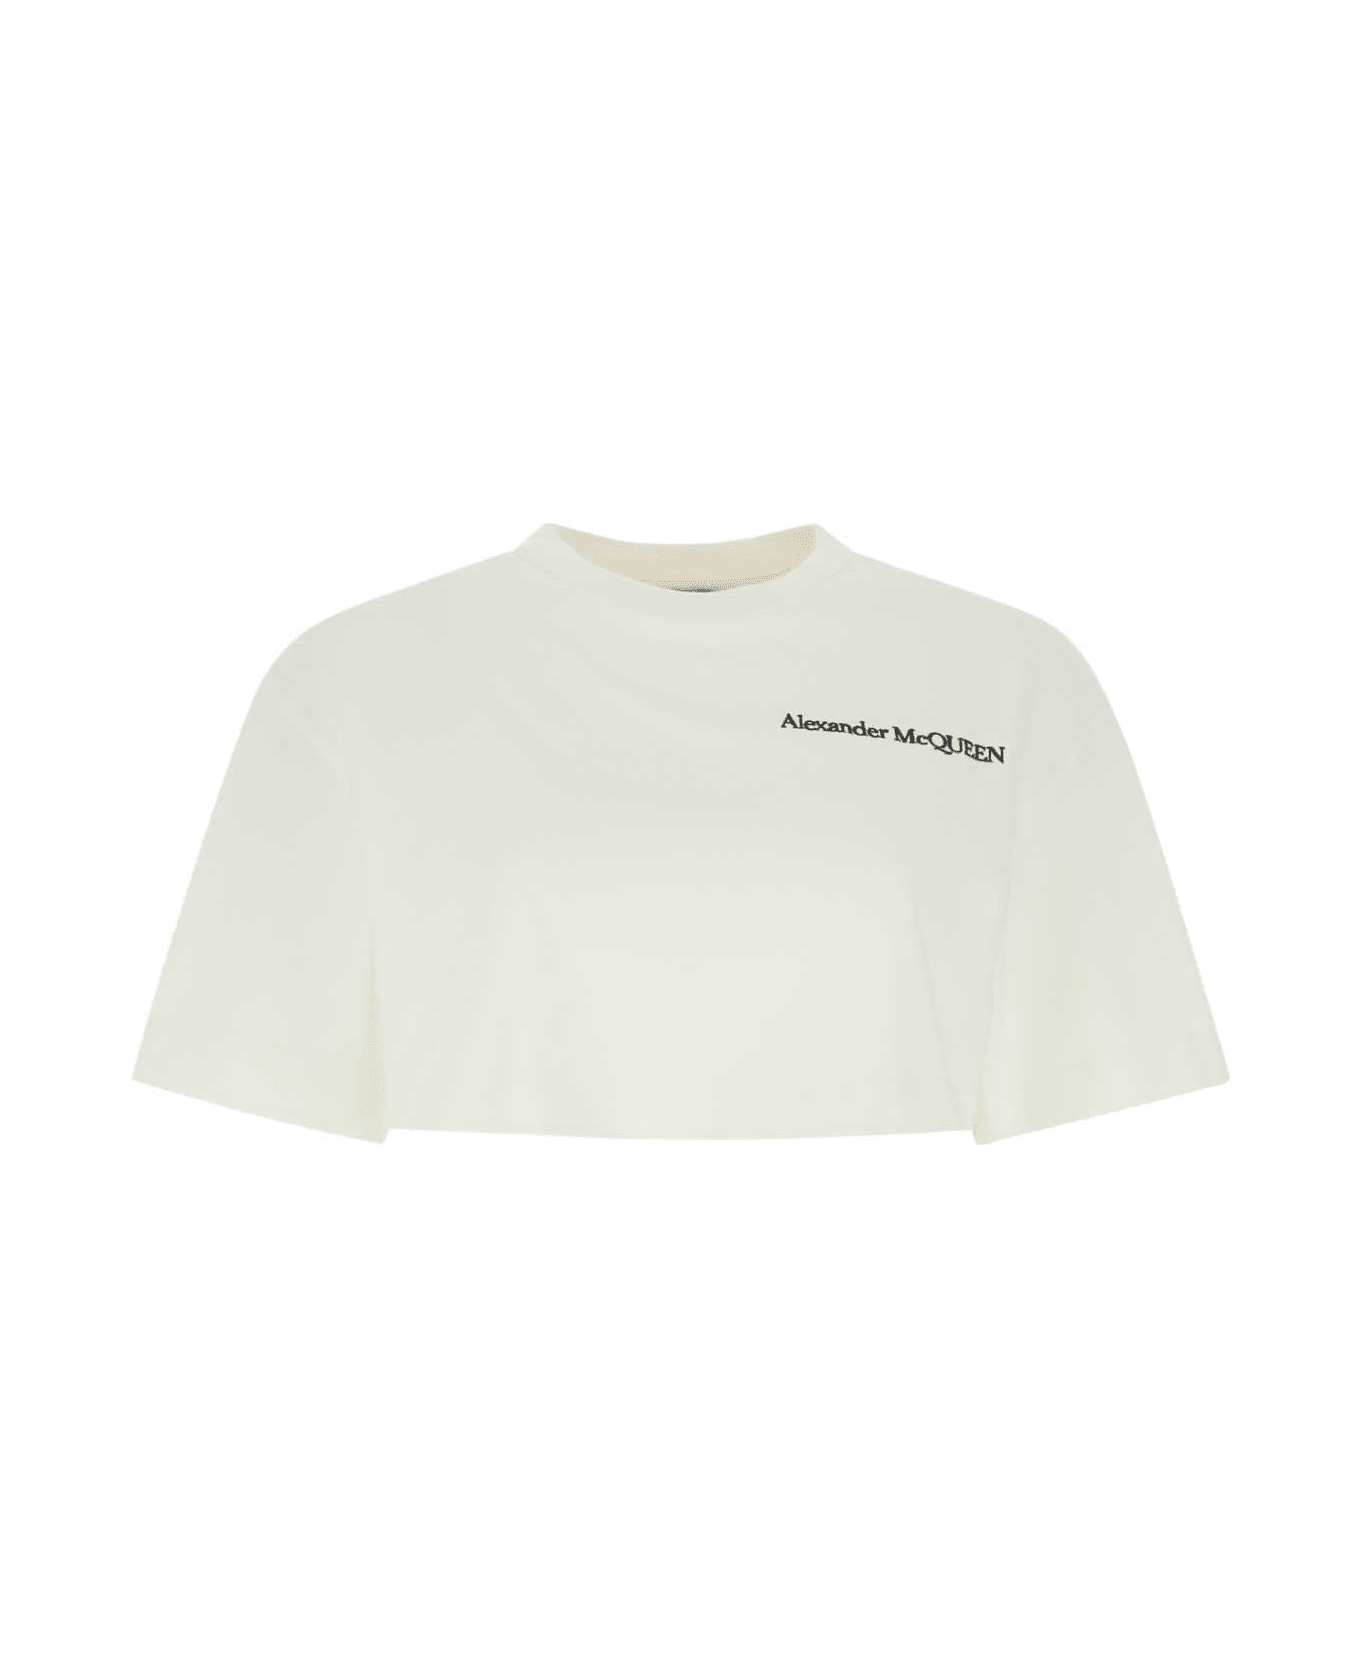 Alexander McQueen White Cotton T-shirt - 0900